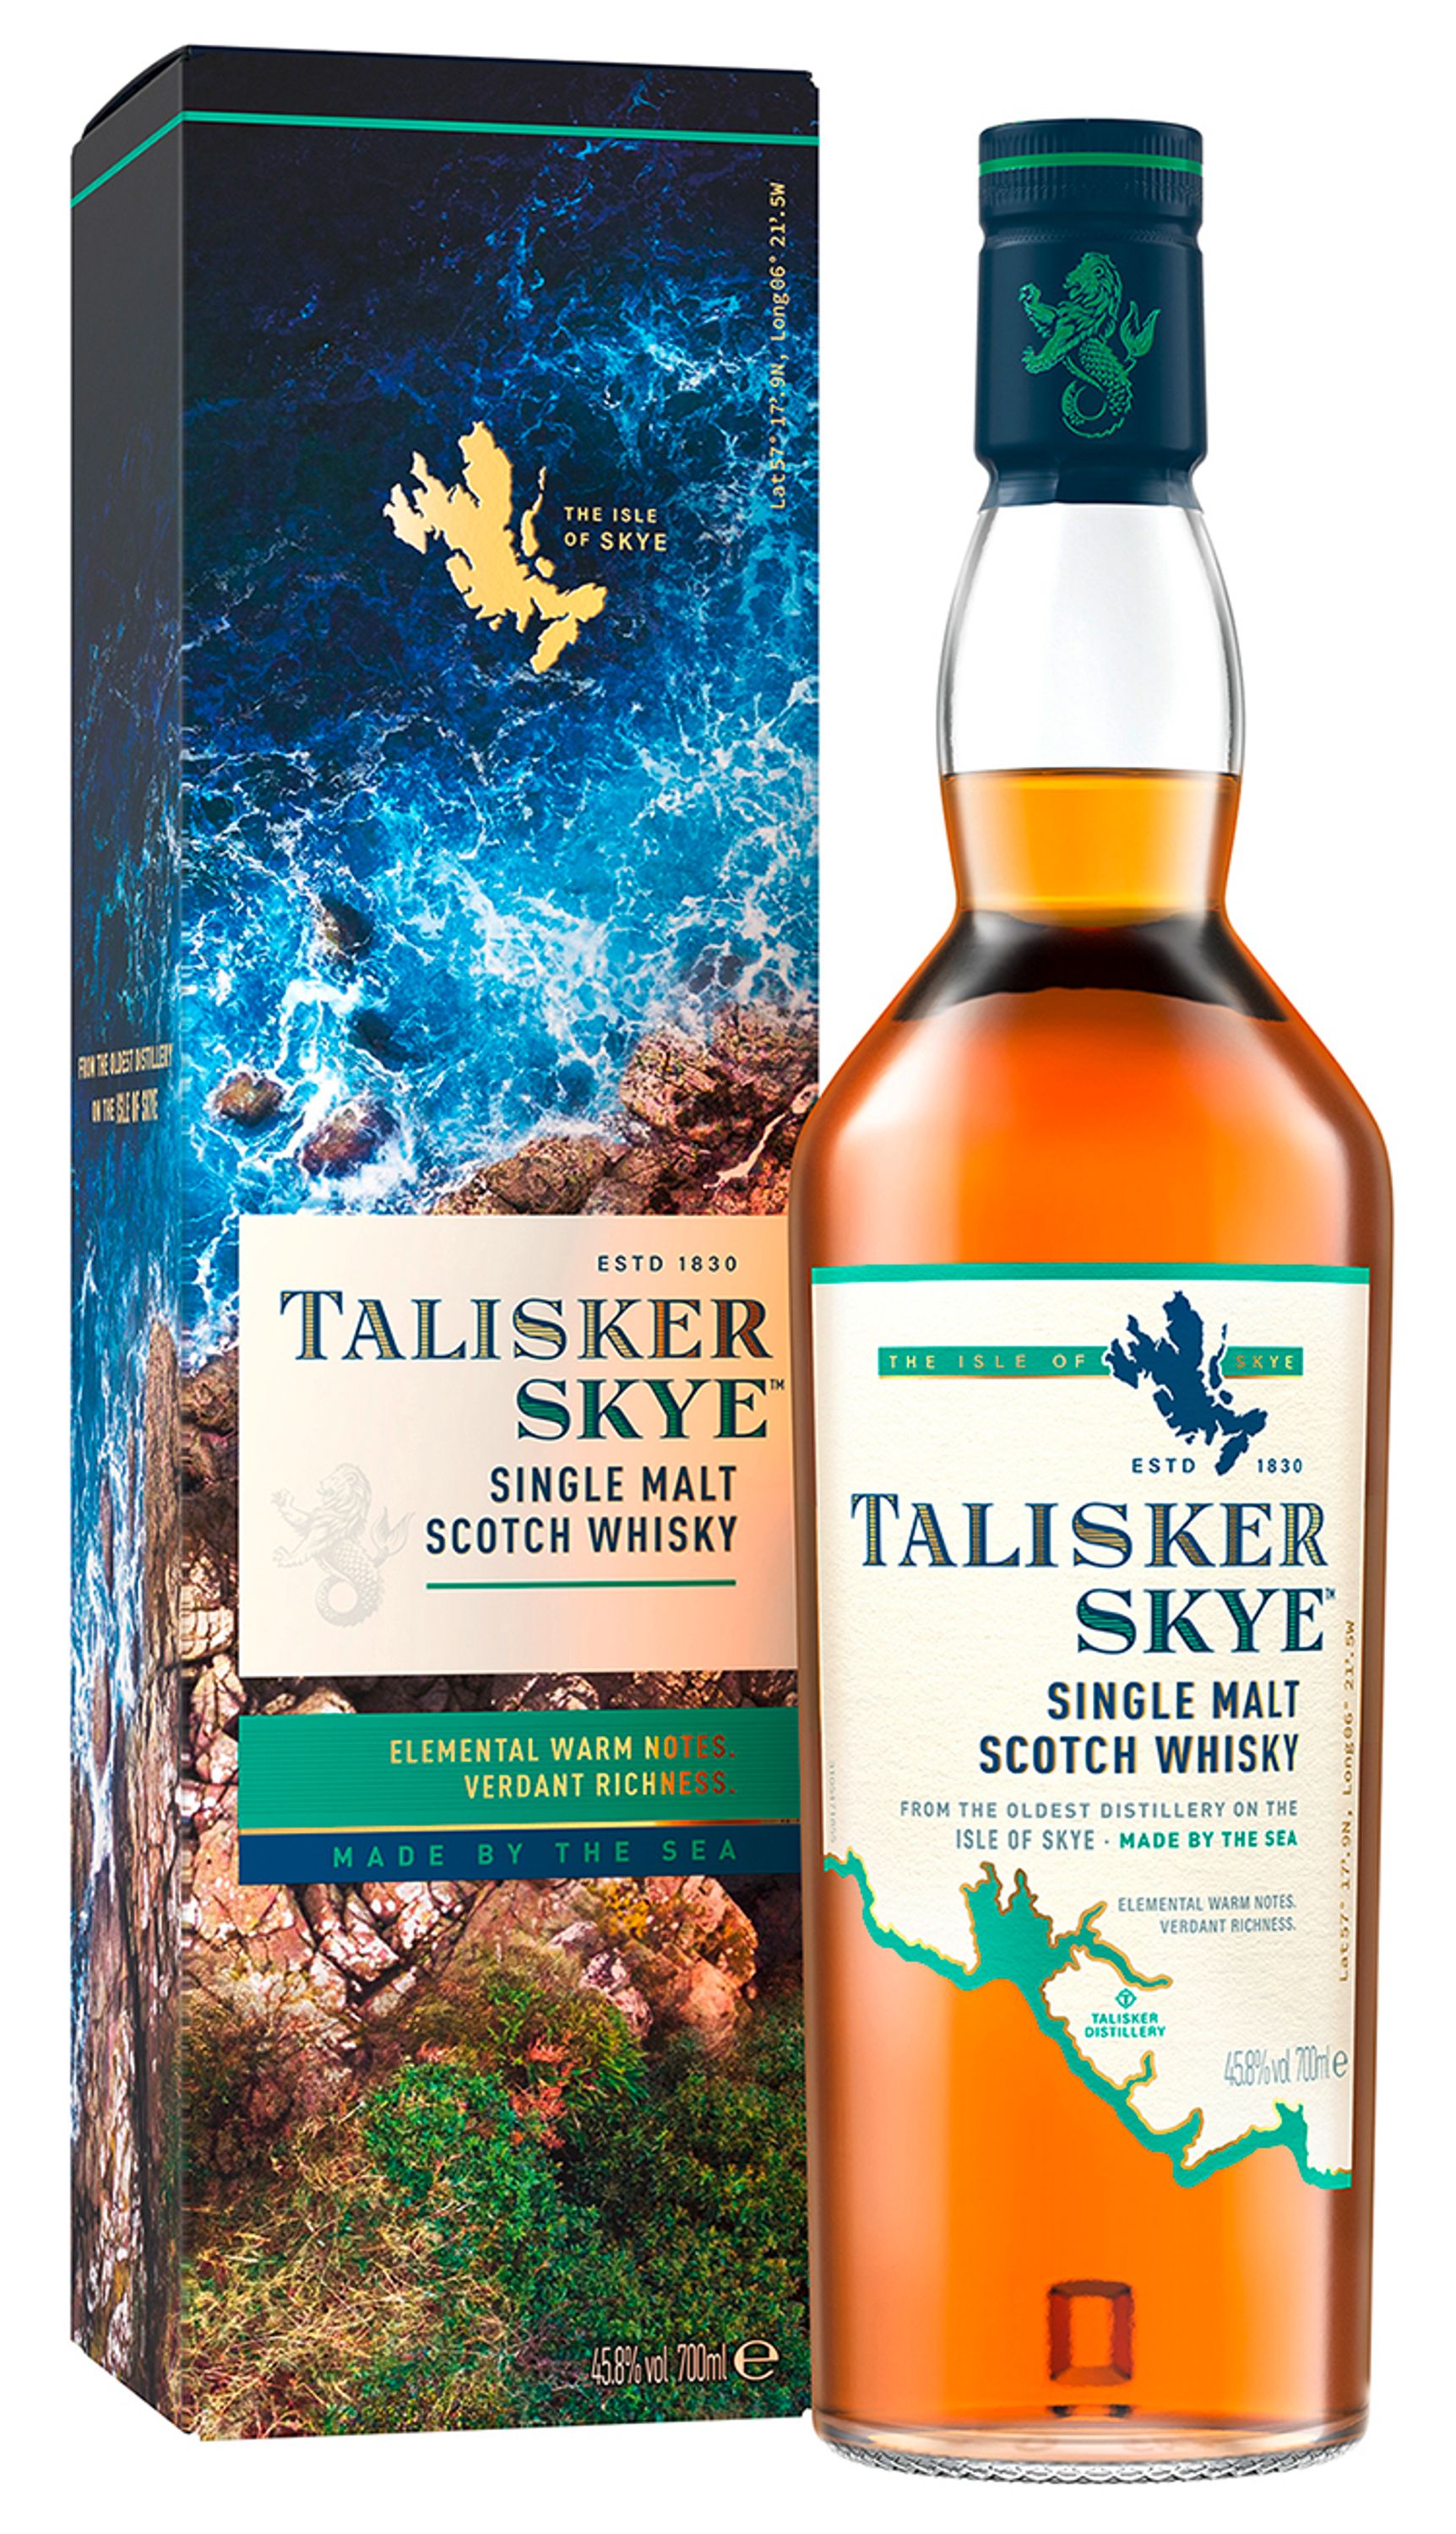 Talisker Skye Single Malt Scotch Whiskey 0.7l, alc. 45.8% by volume